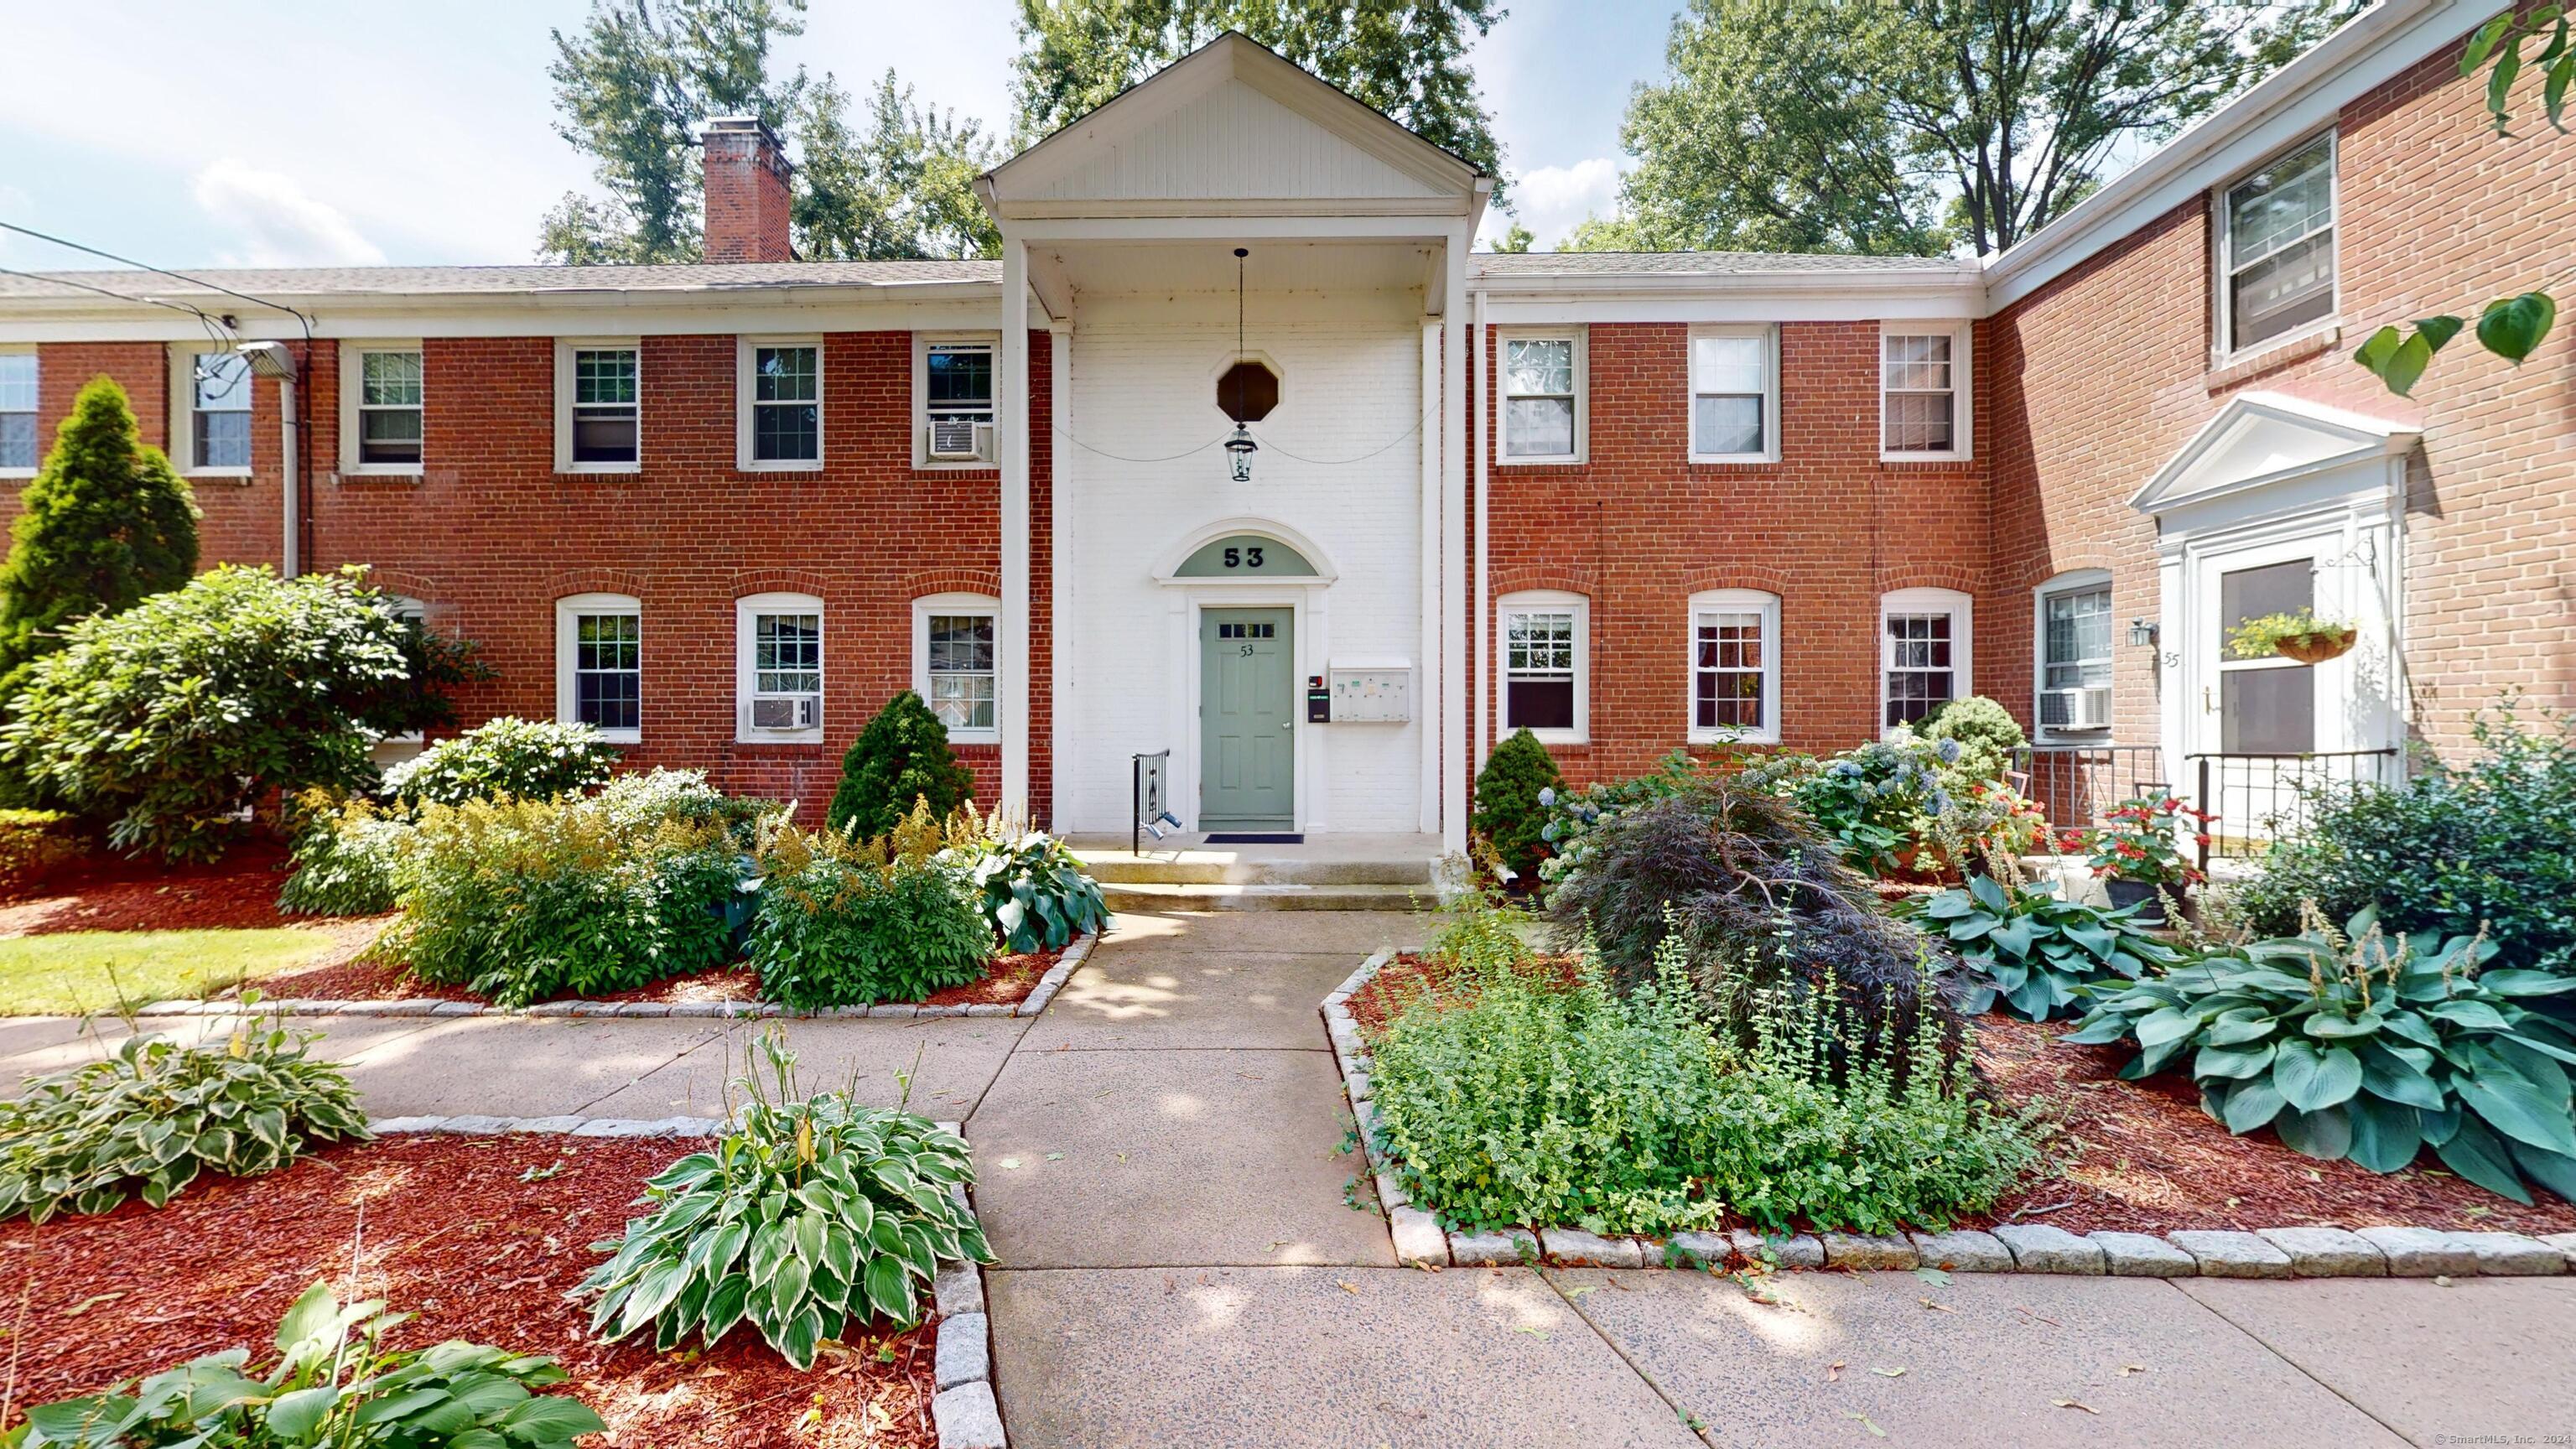 Rental Property at 53 Robin Road Apt B2, West Hartford, Connecticut - Bedrooms: 2 
Bathrooms: 1 
Rooms: 4  - $1,850 MO.